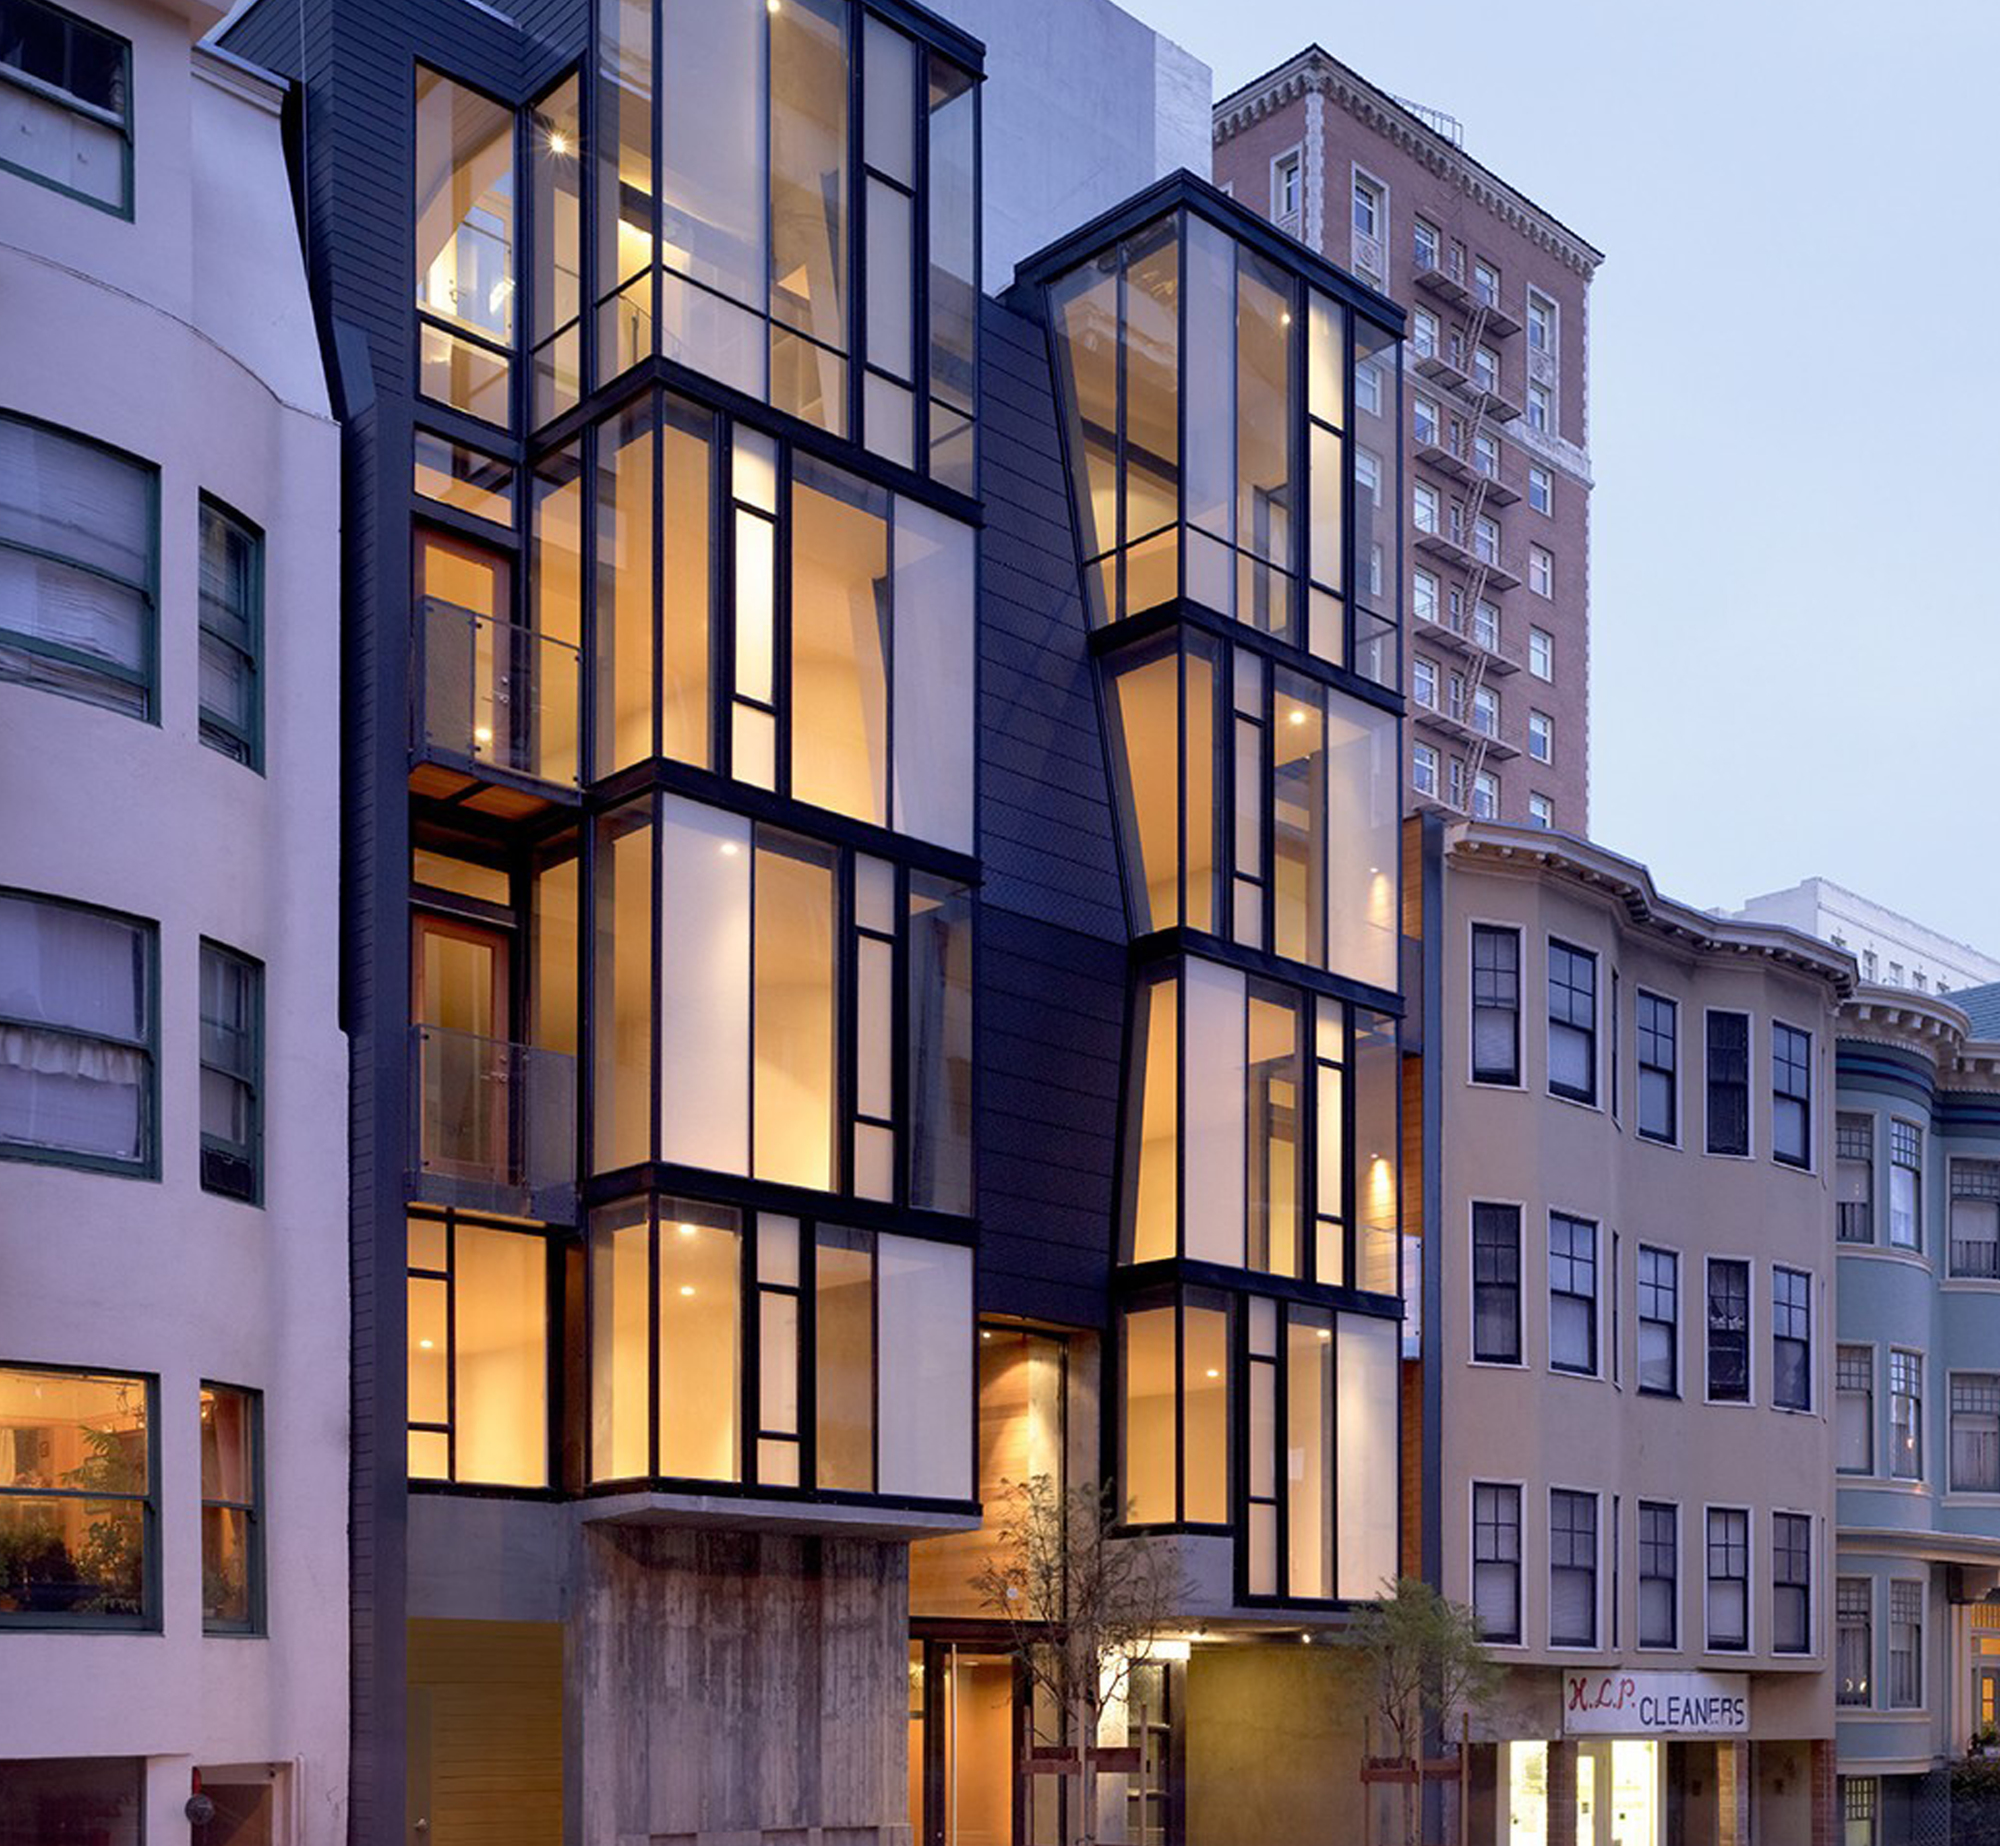 Condominiums in the Nob Hill neighborhood of San Francisco featuring Bonelli windows.